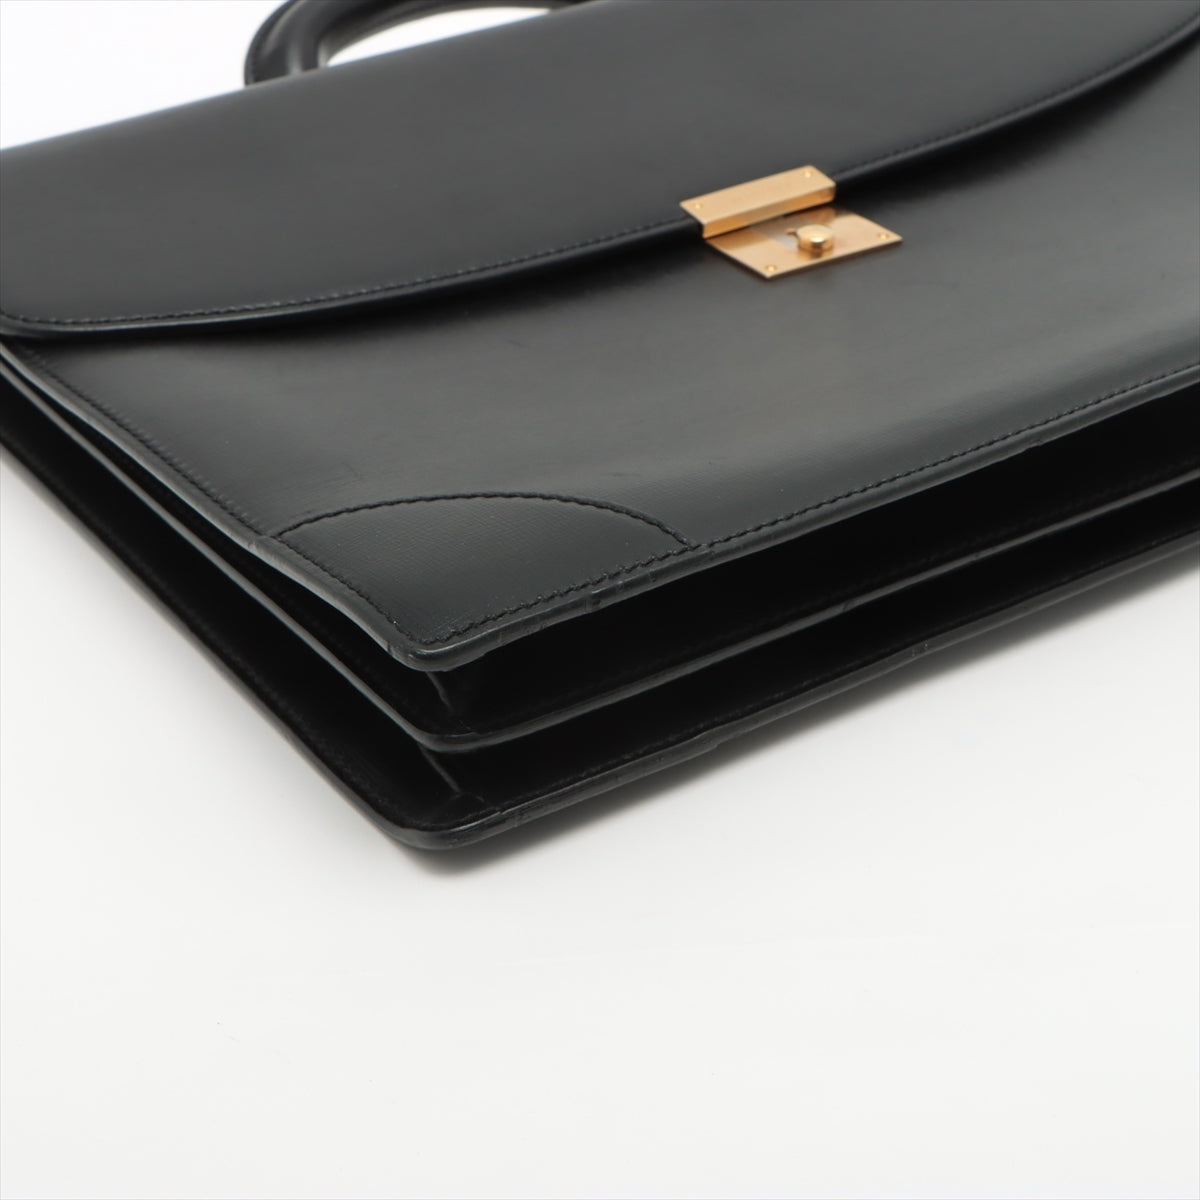 Valextra Leather Business bag Black keyed